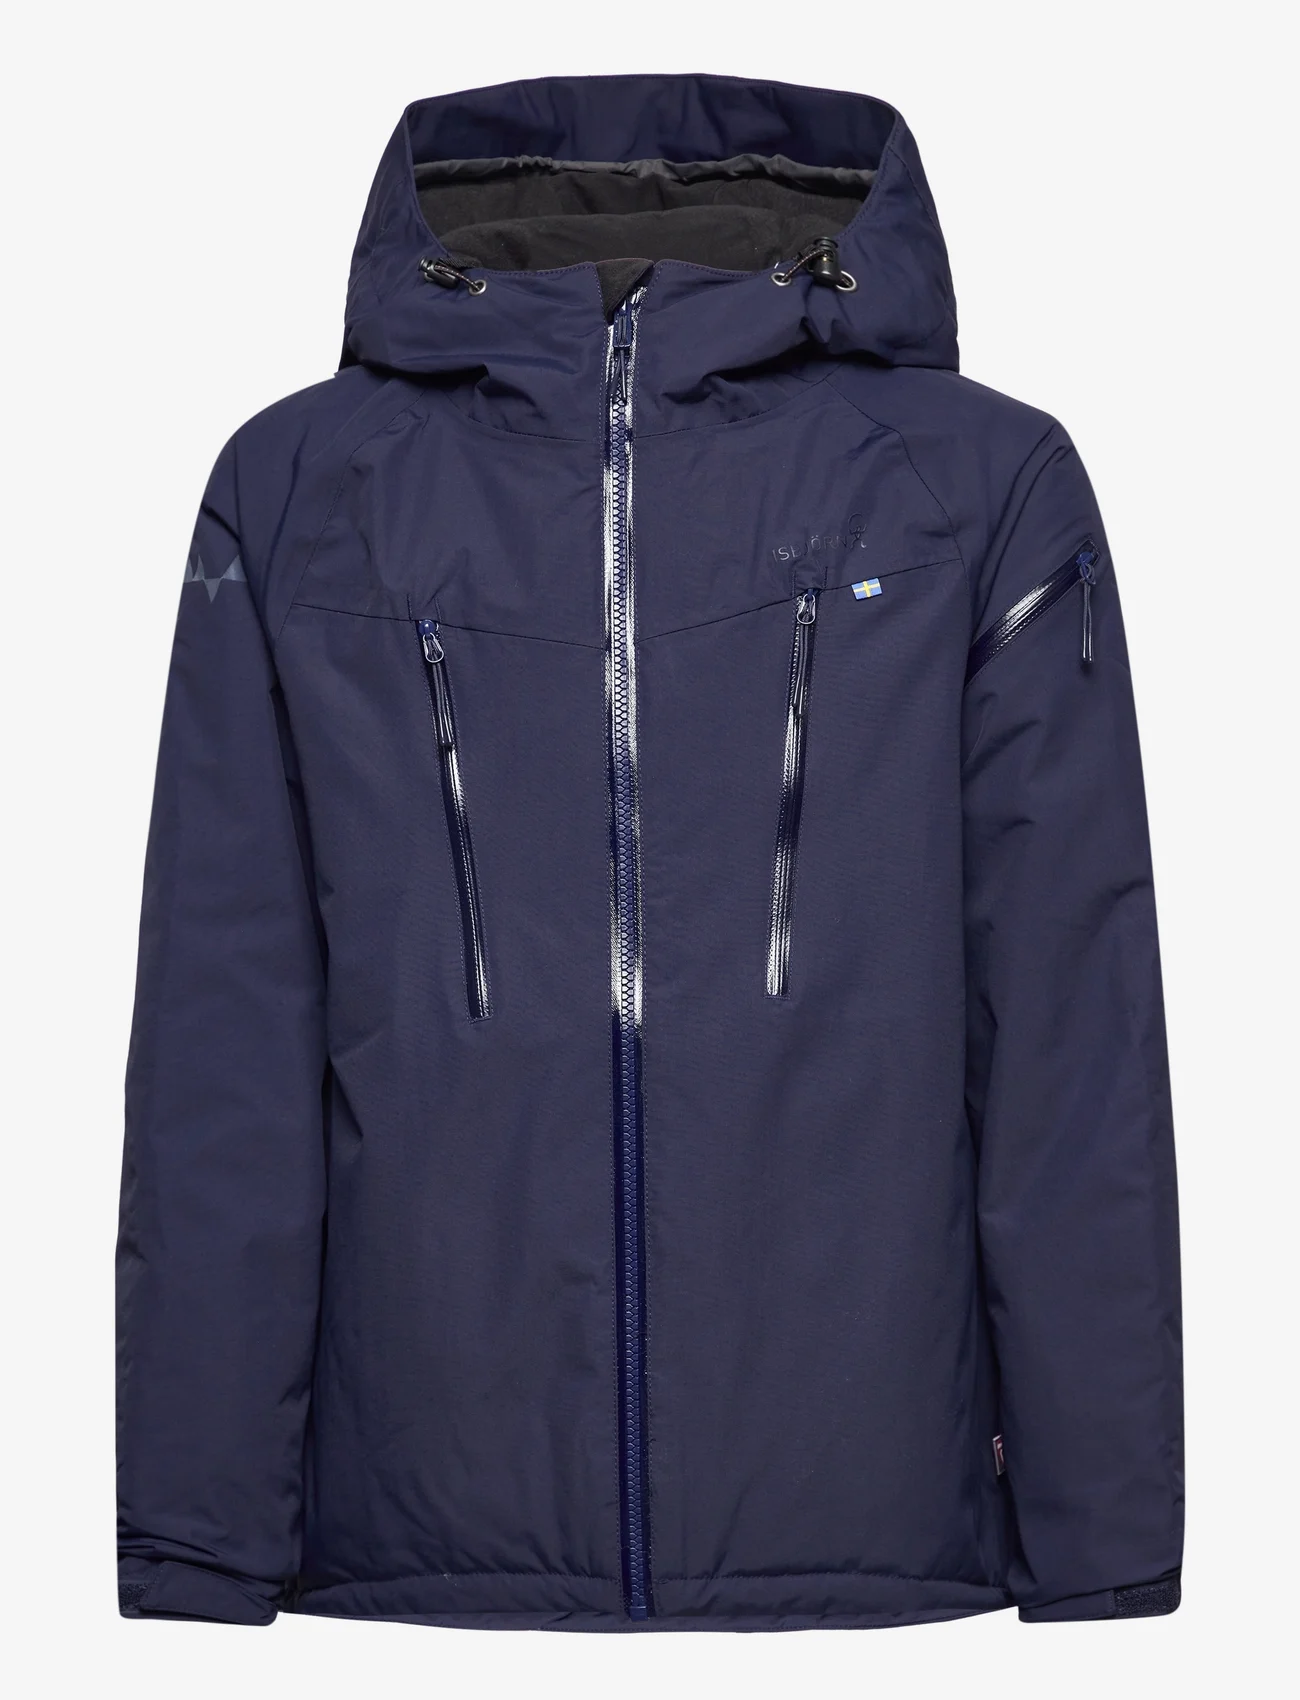 ISBJÖRN of Sweden - CARVING Winter Jacket Teens - ski jackets - navy - 0